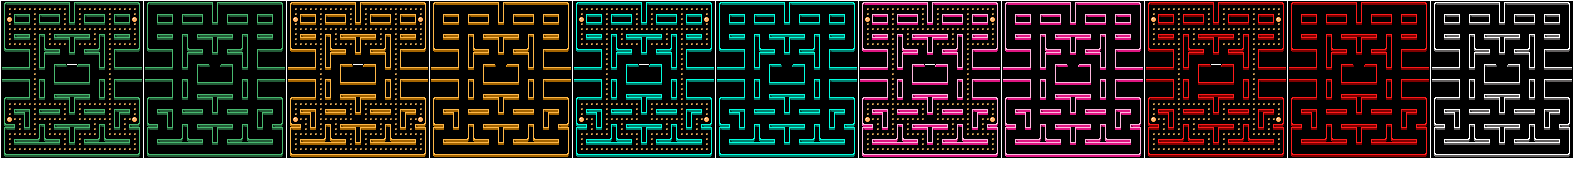 Pac-Man Plus (J2ME) - Mazes (176x220)